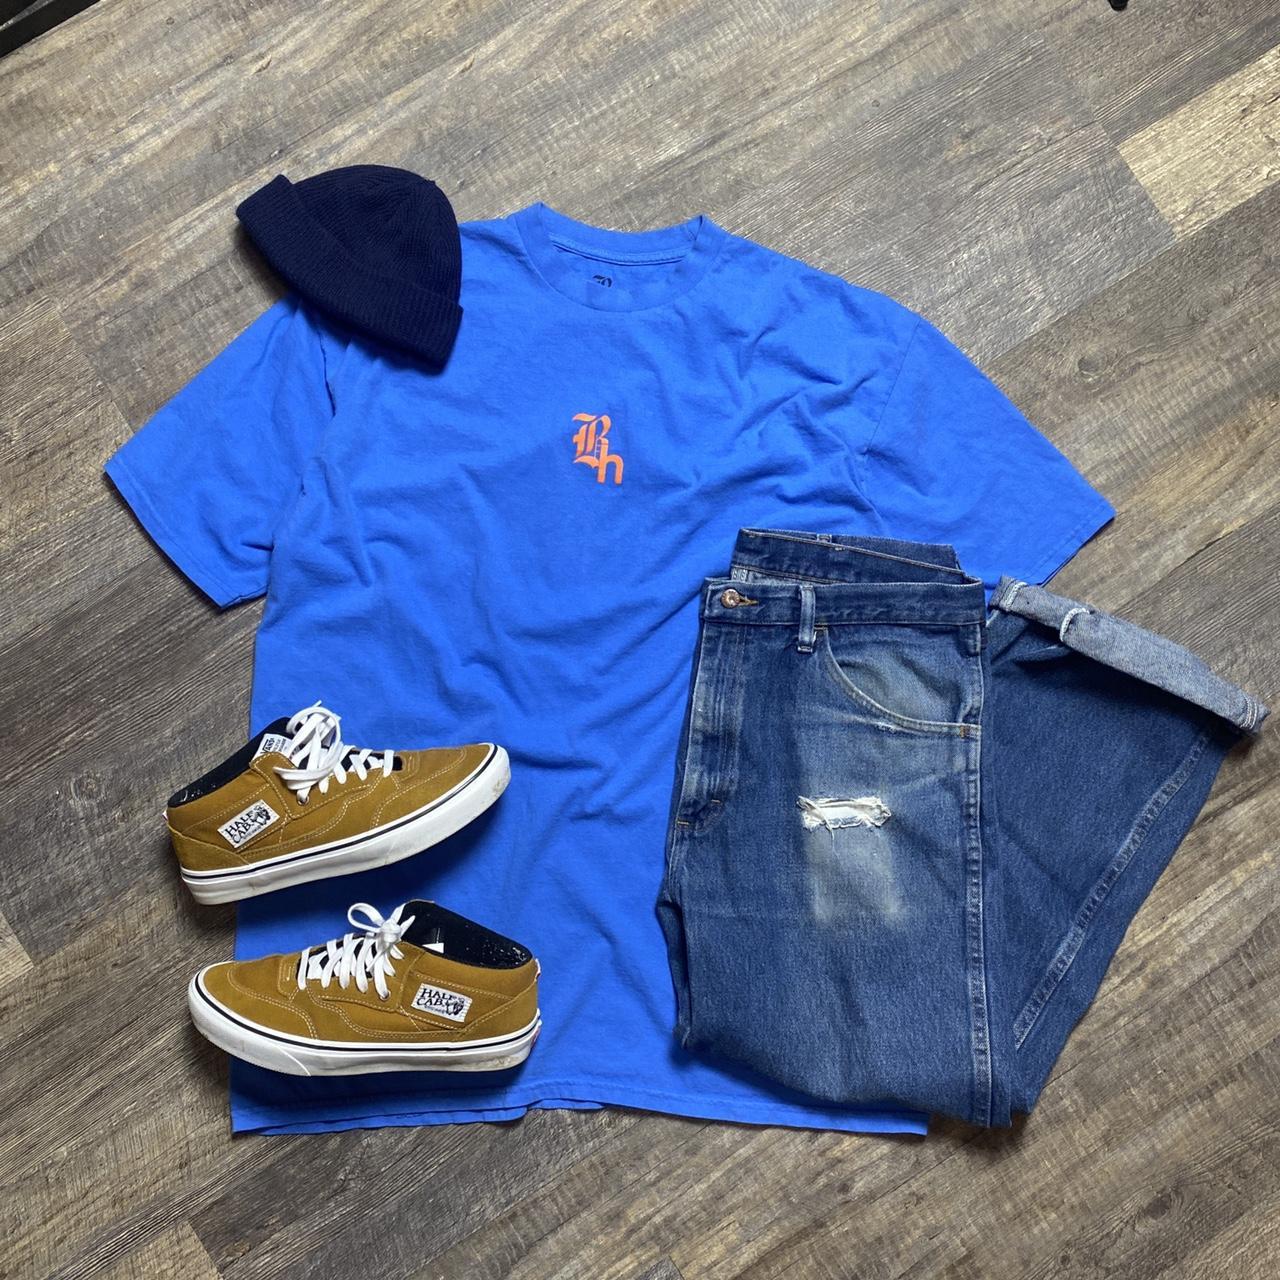 Brockhampton Men's Blue and Orange T-shirt (4)